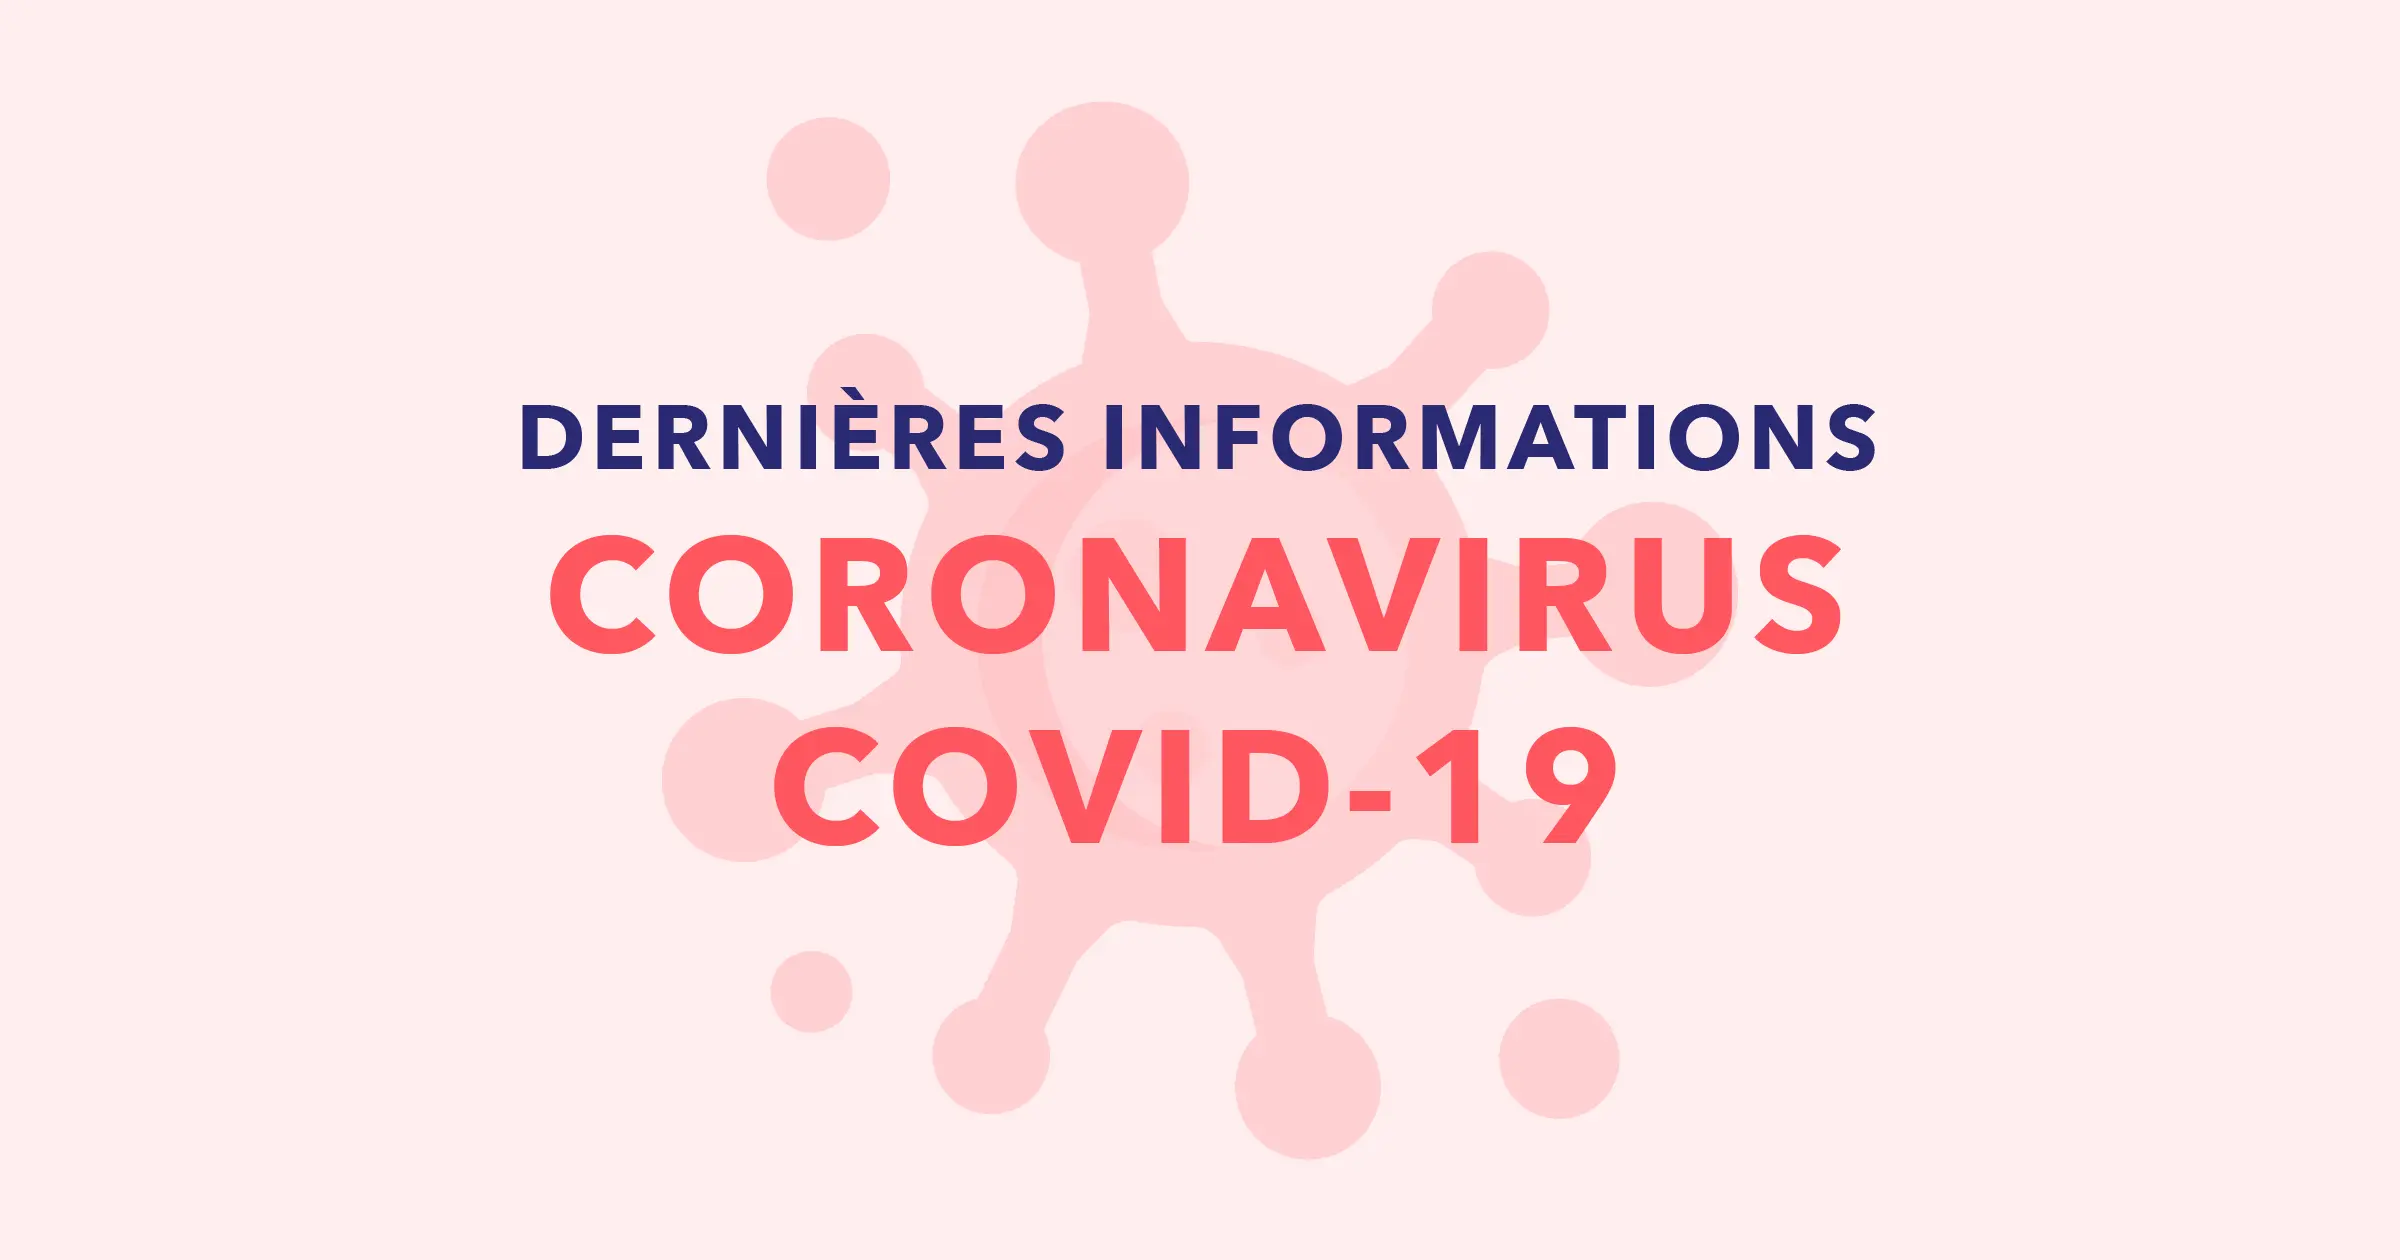 info-coronavirus-post-fb-1200x630-1.webp